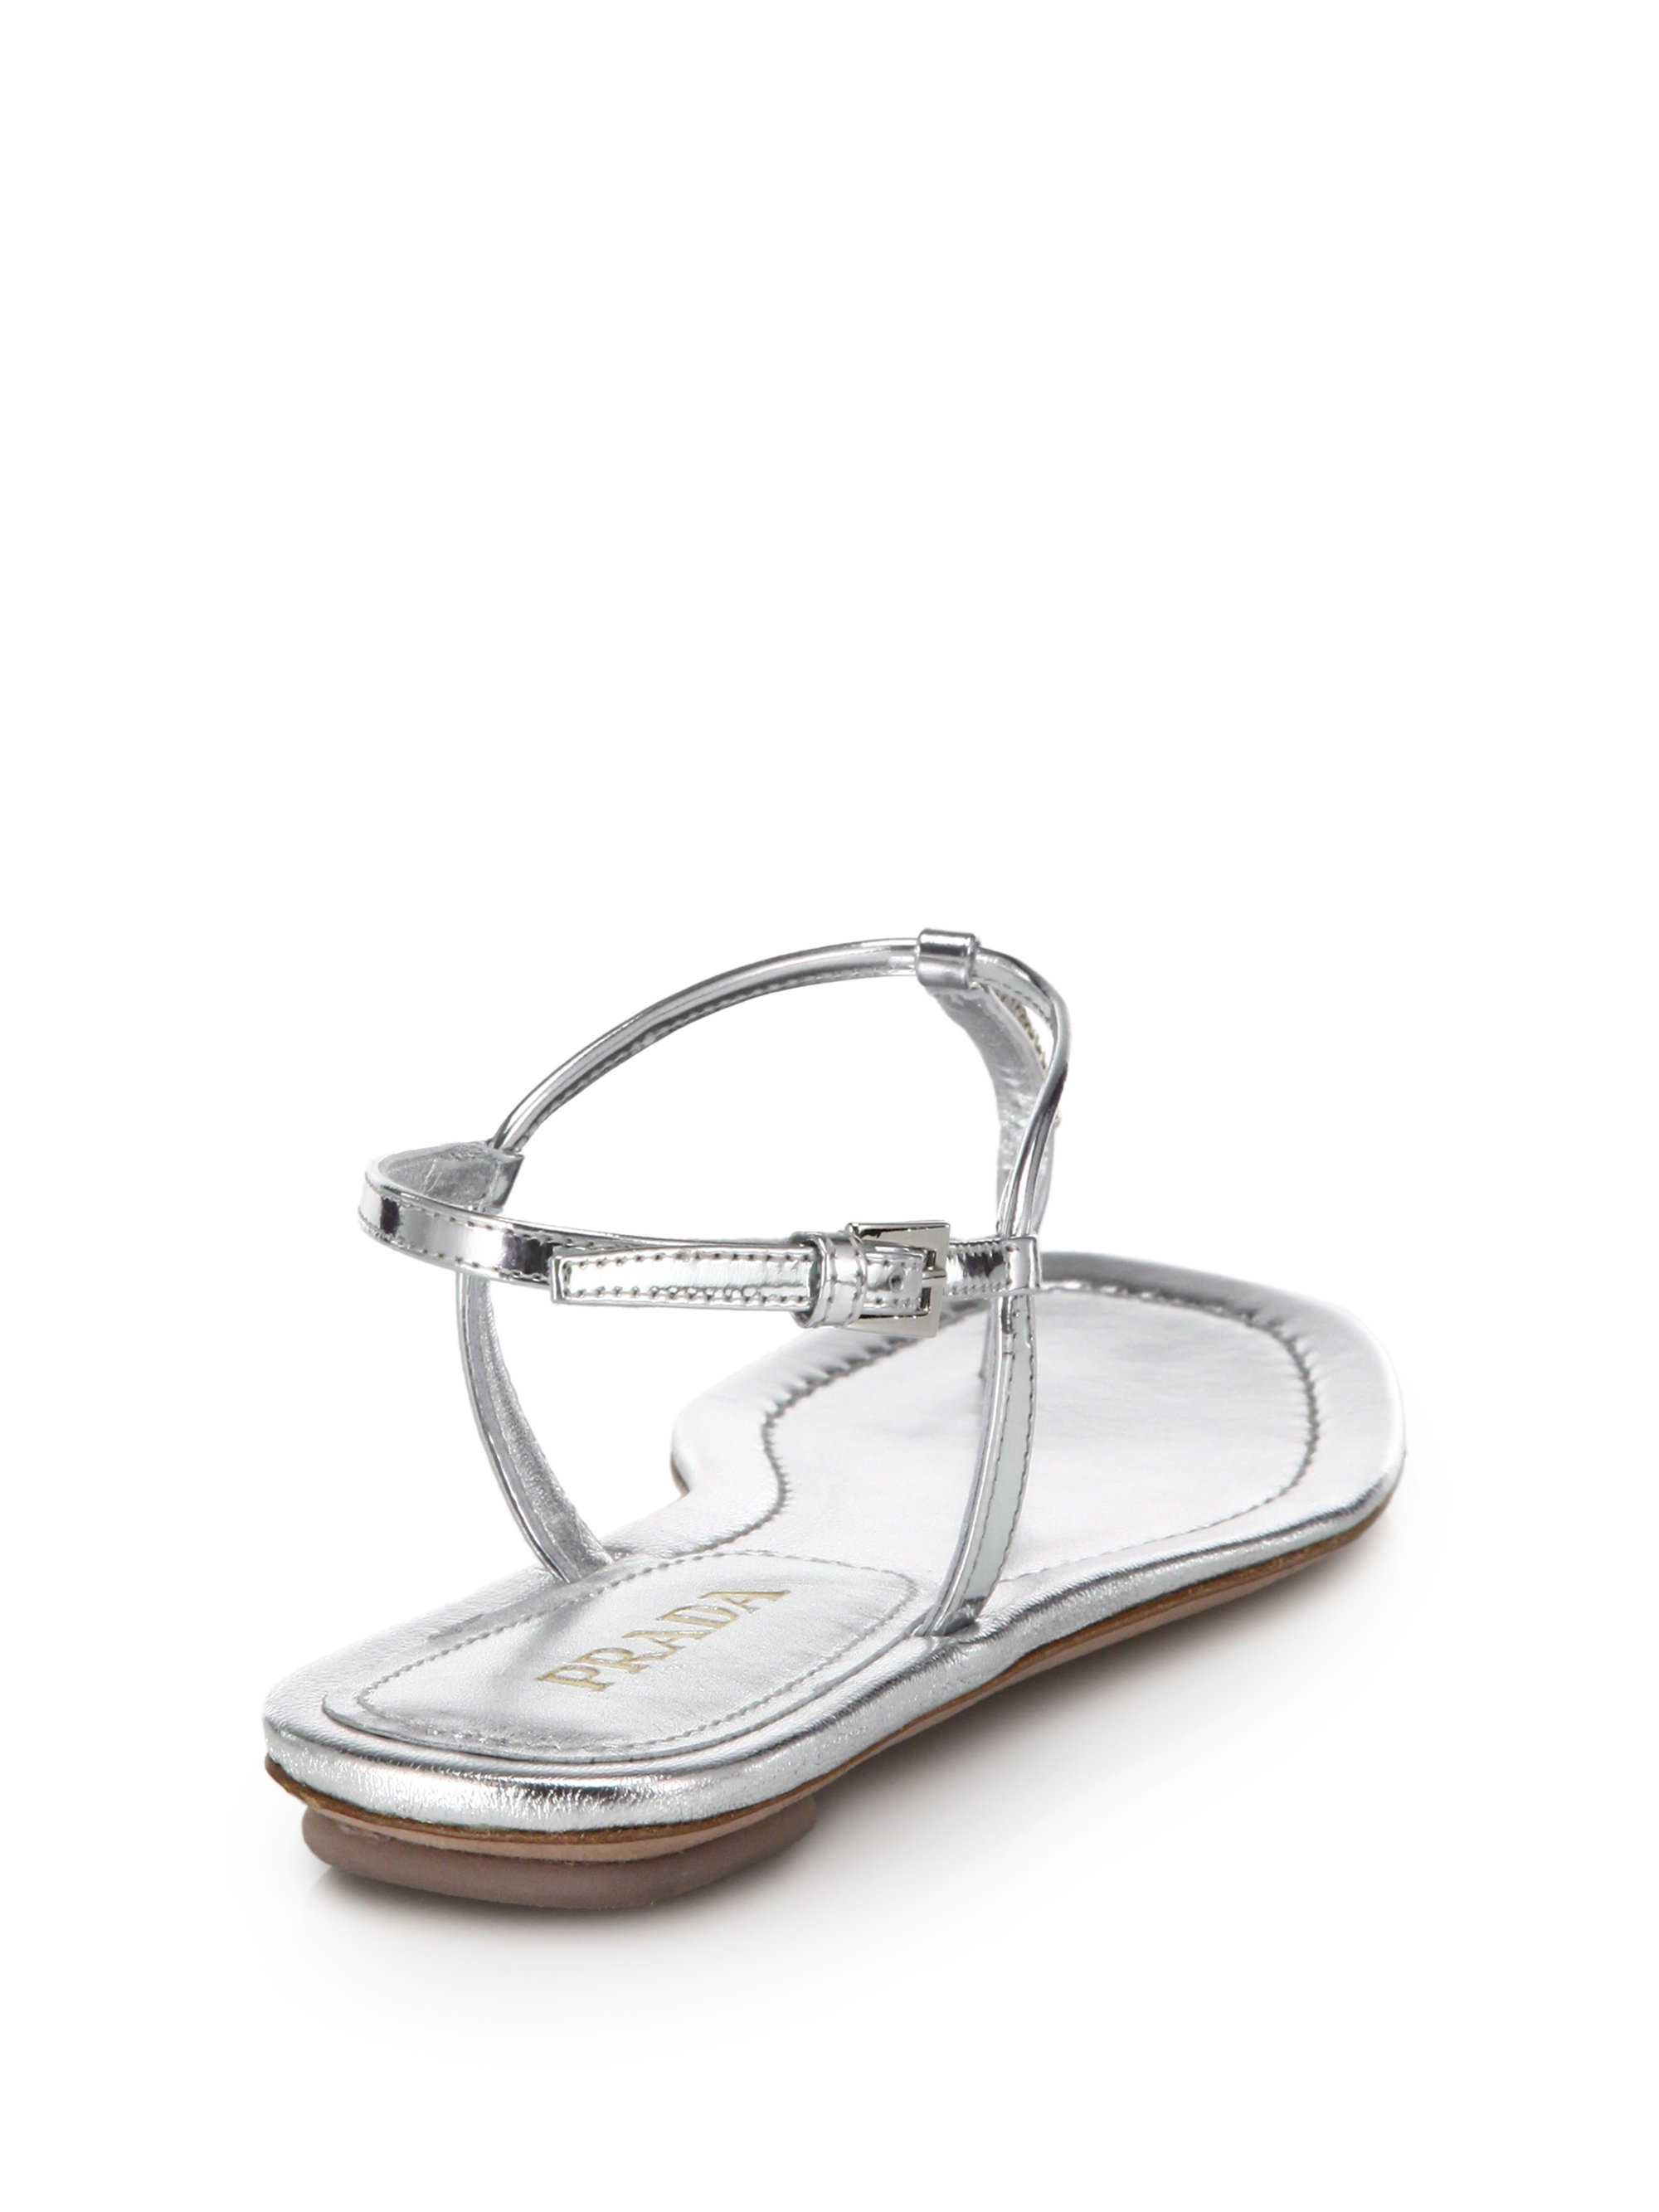 Lyst - Prada Swarovski Crystal Flat Metallic Leather Sandals in Metallic